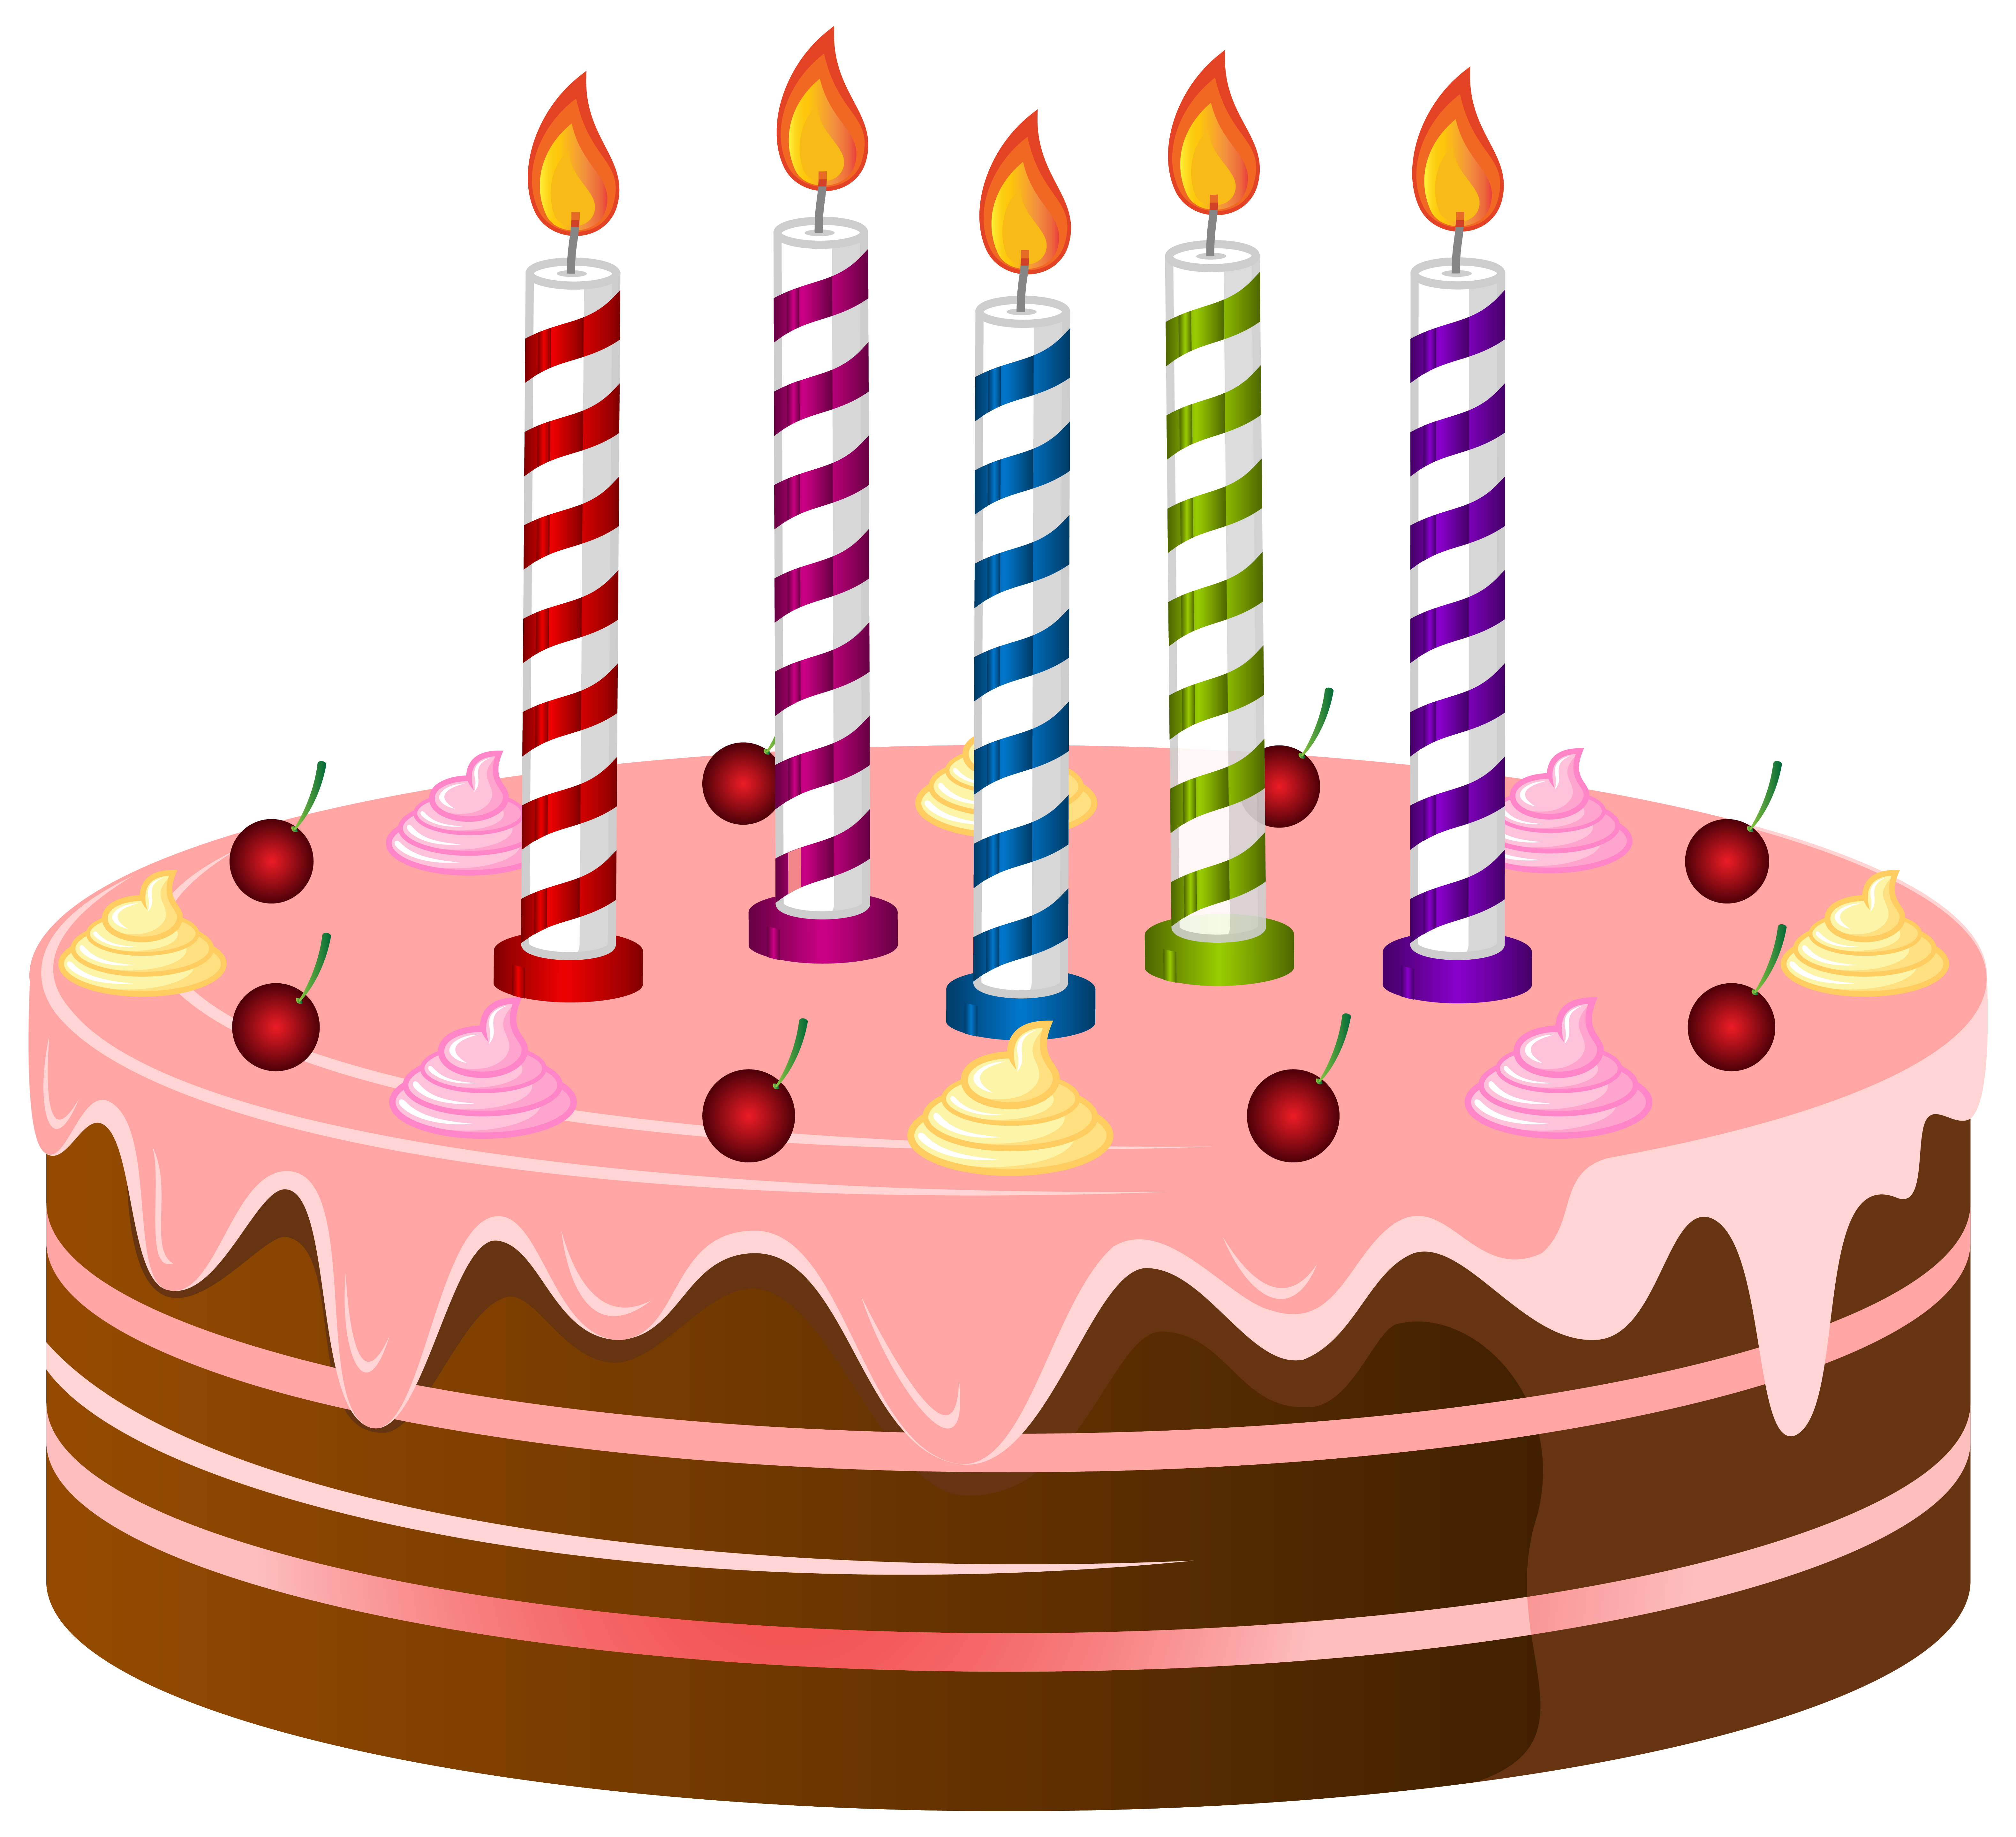 Birthday cake clip art image - Clipartix